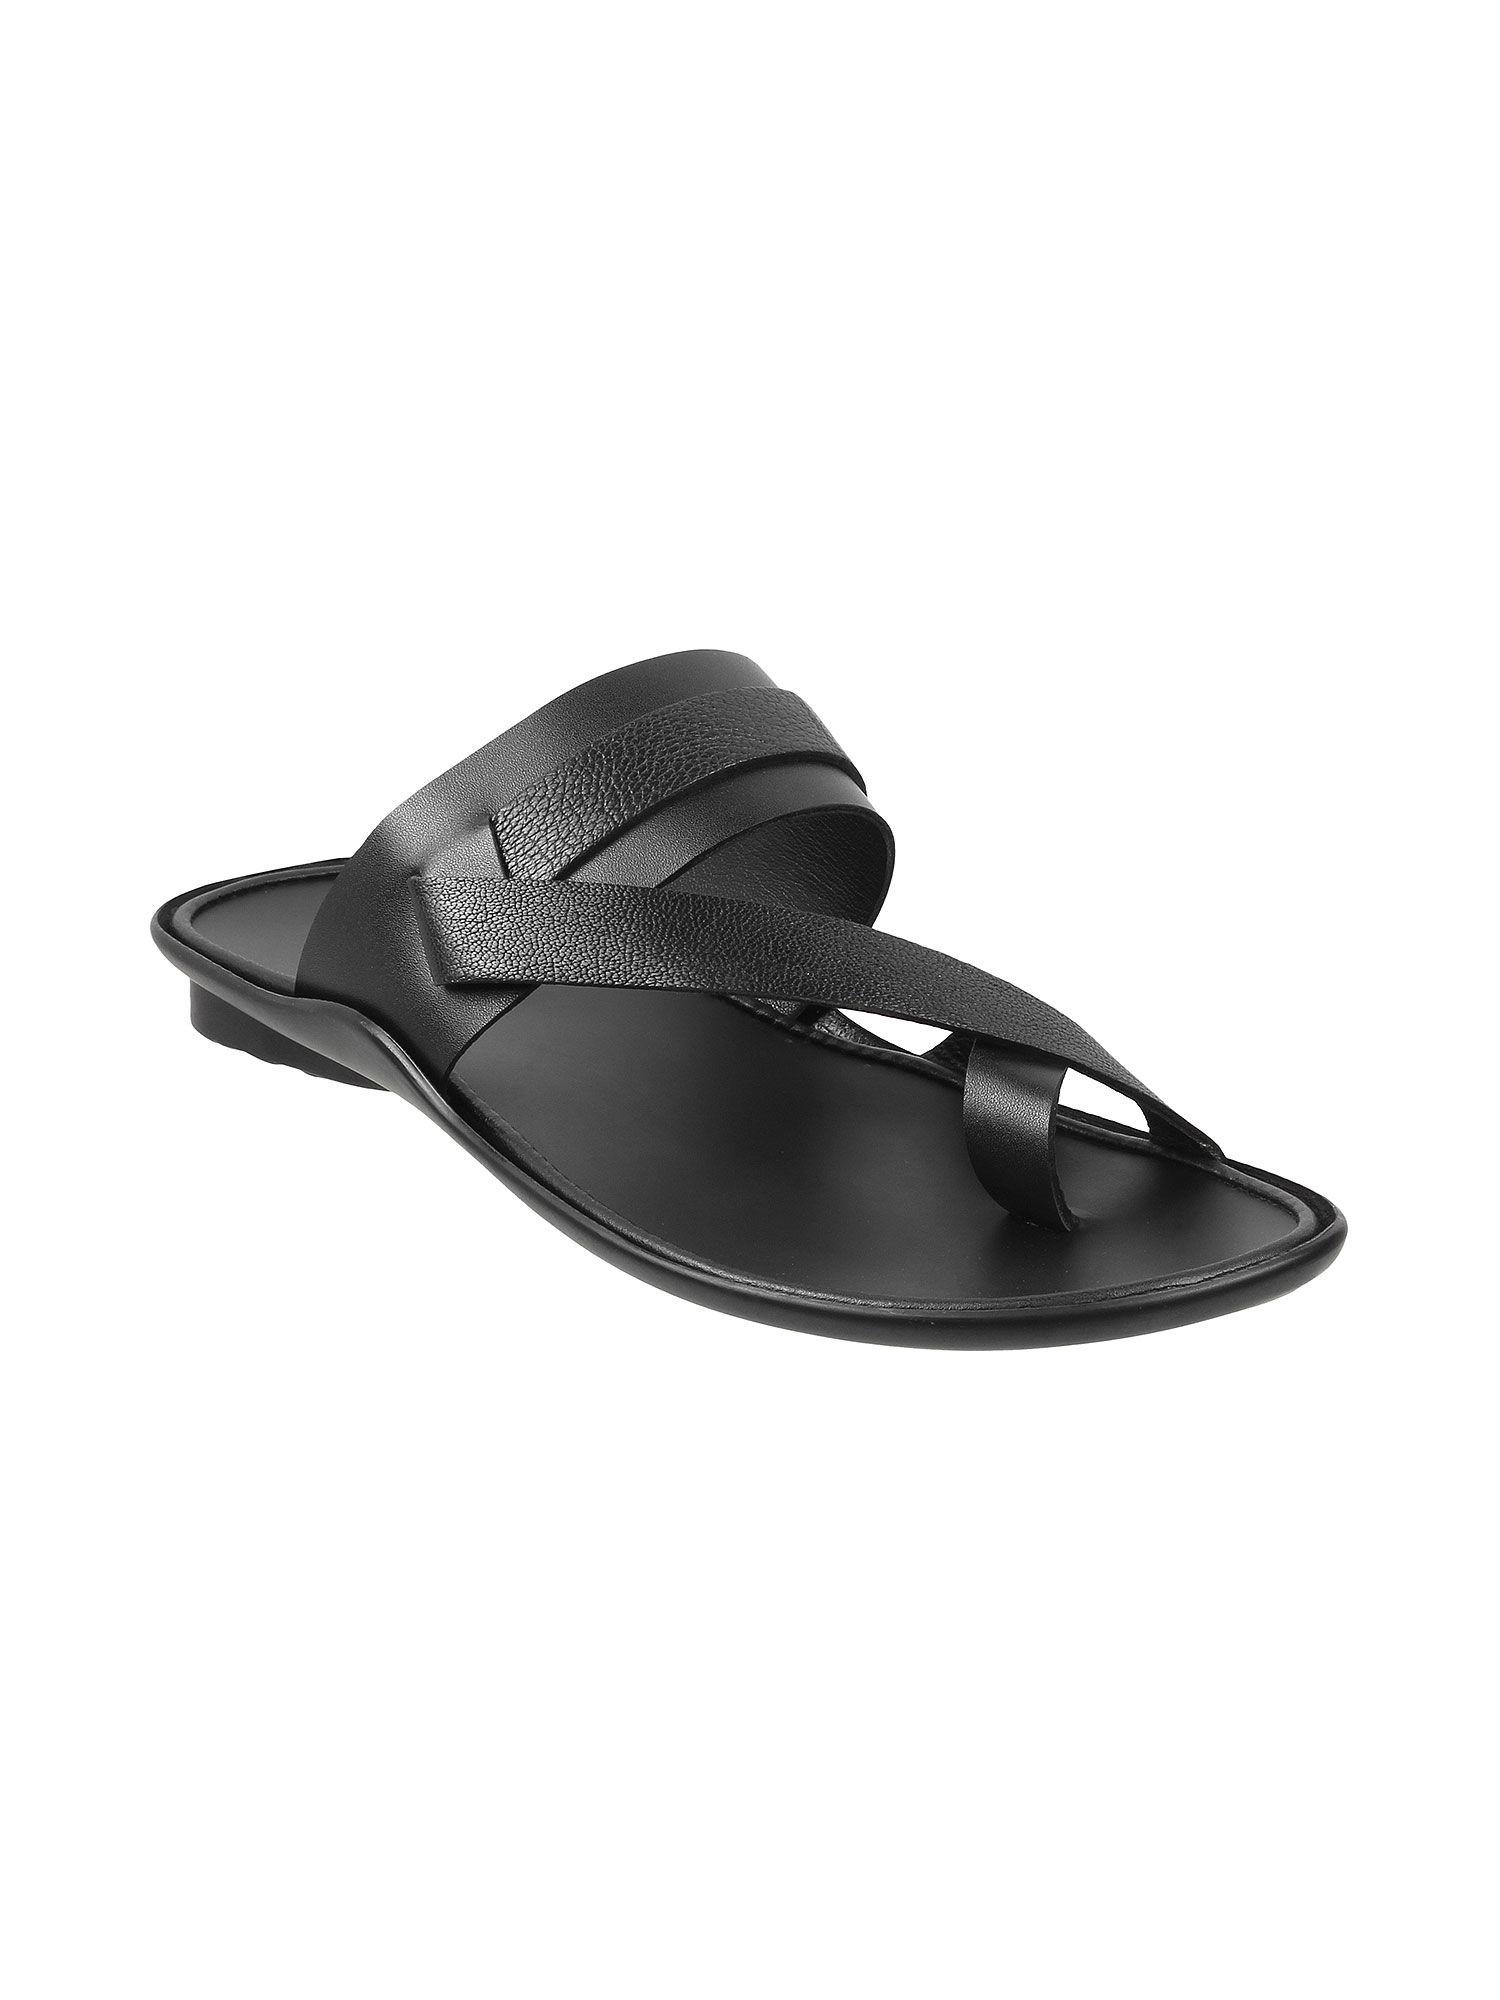 mens-black-flat-chappalsmochi-solid-black-sandals